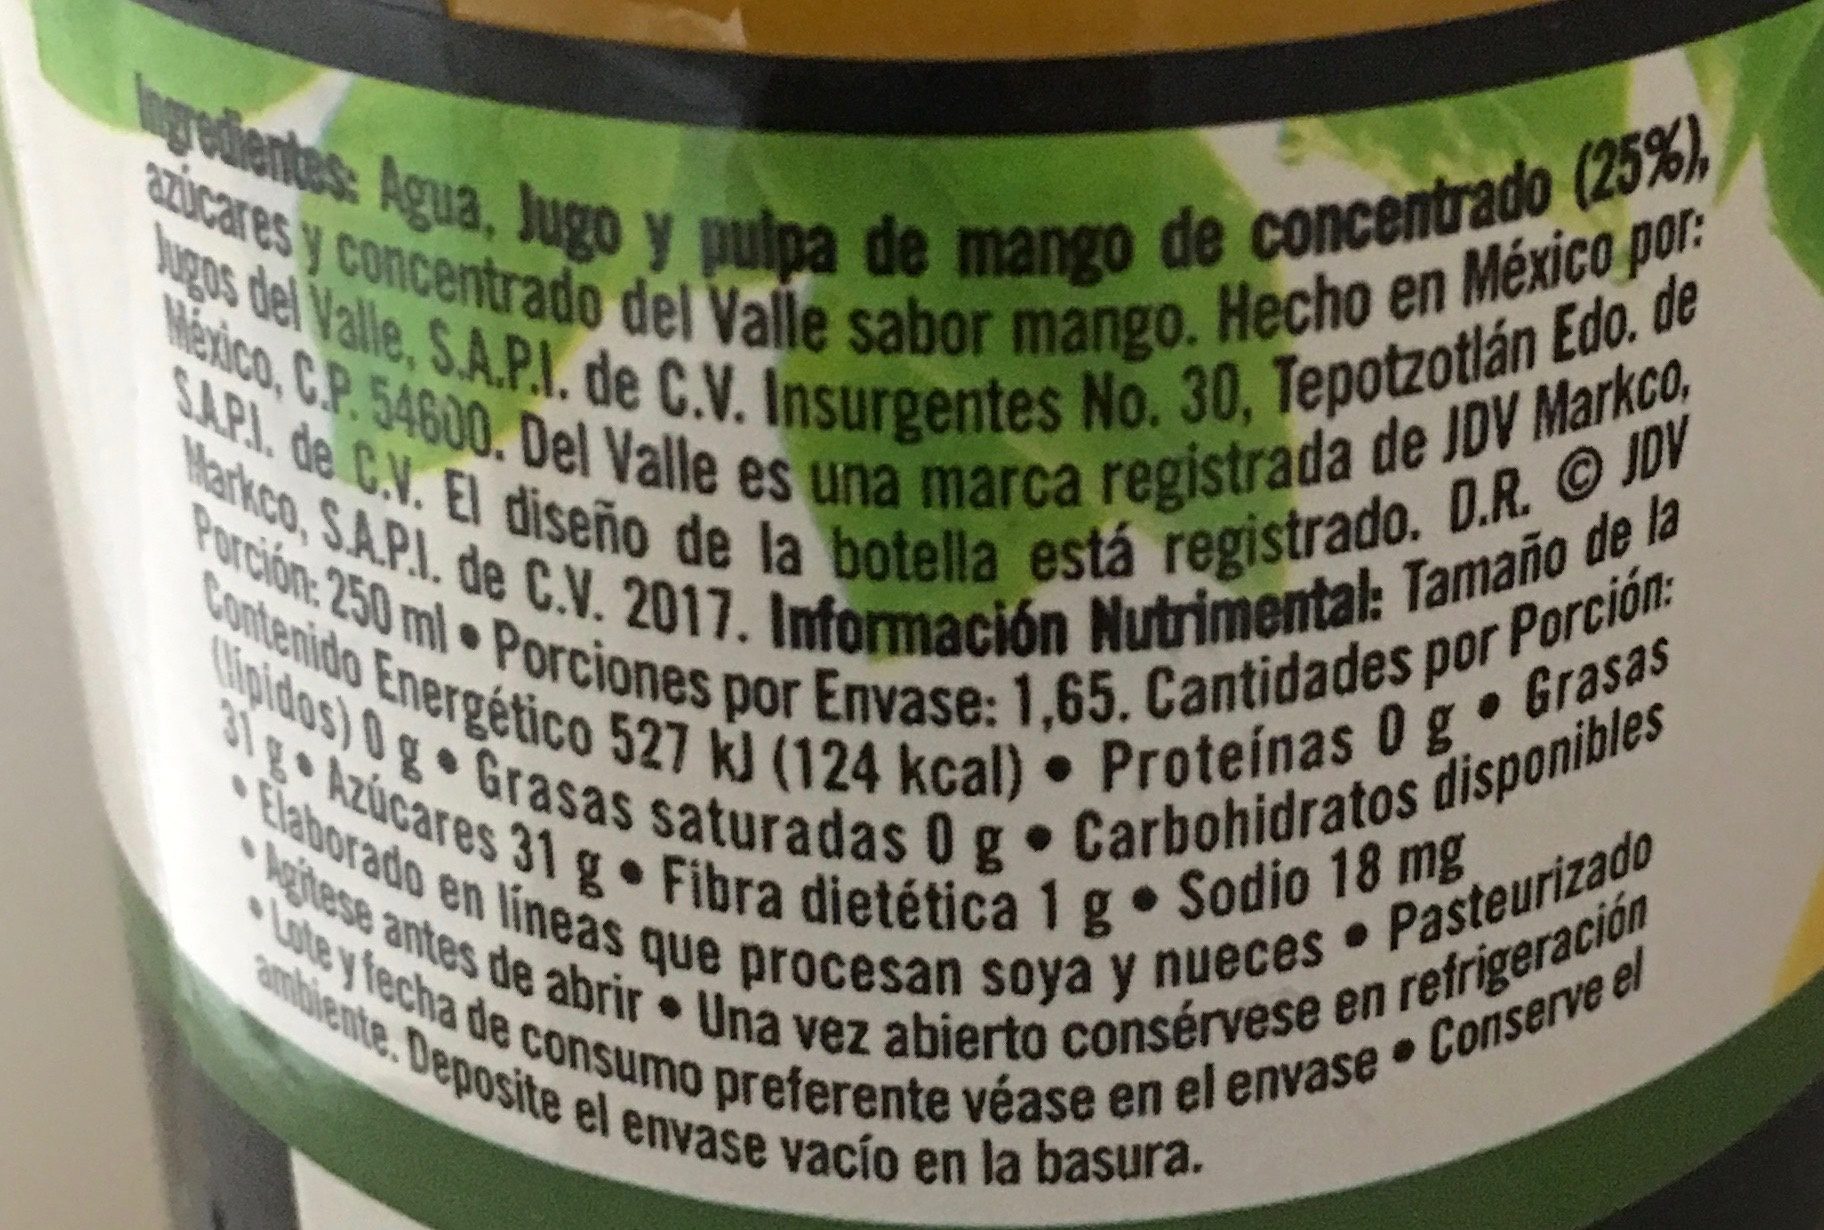 Del Valle Nectar de Mango - Nährwertangaben - es